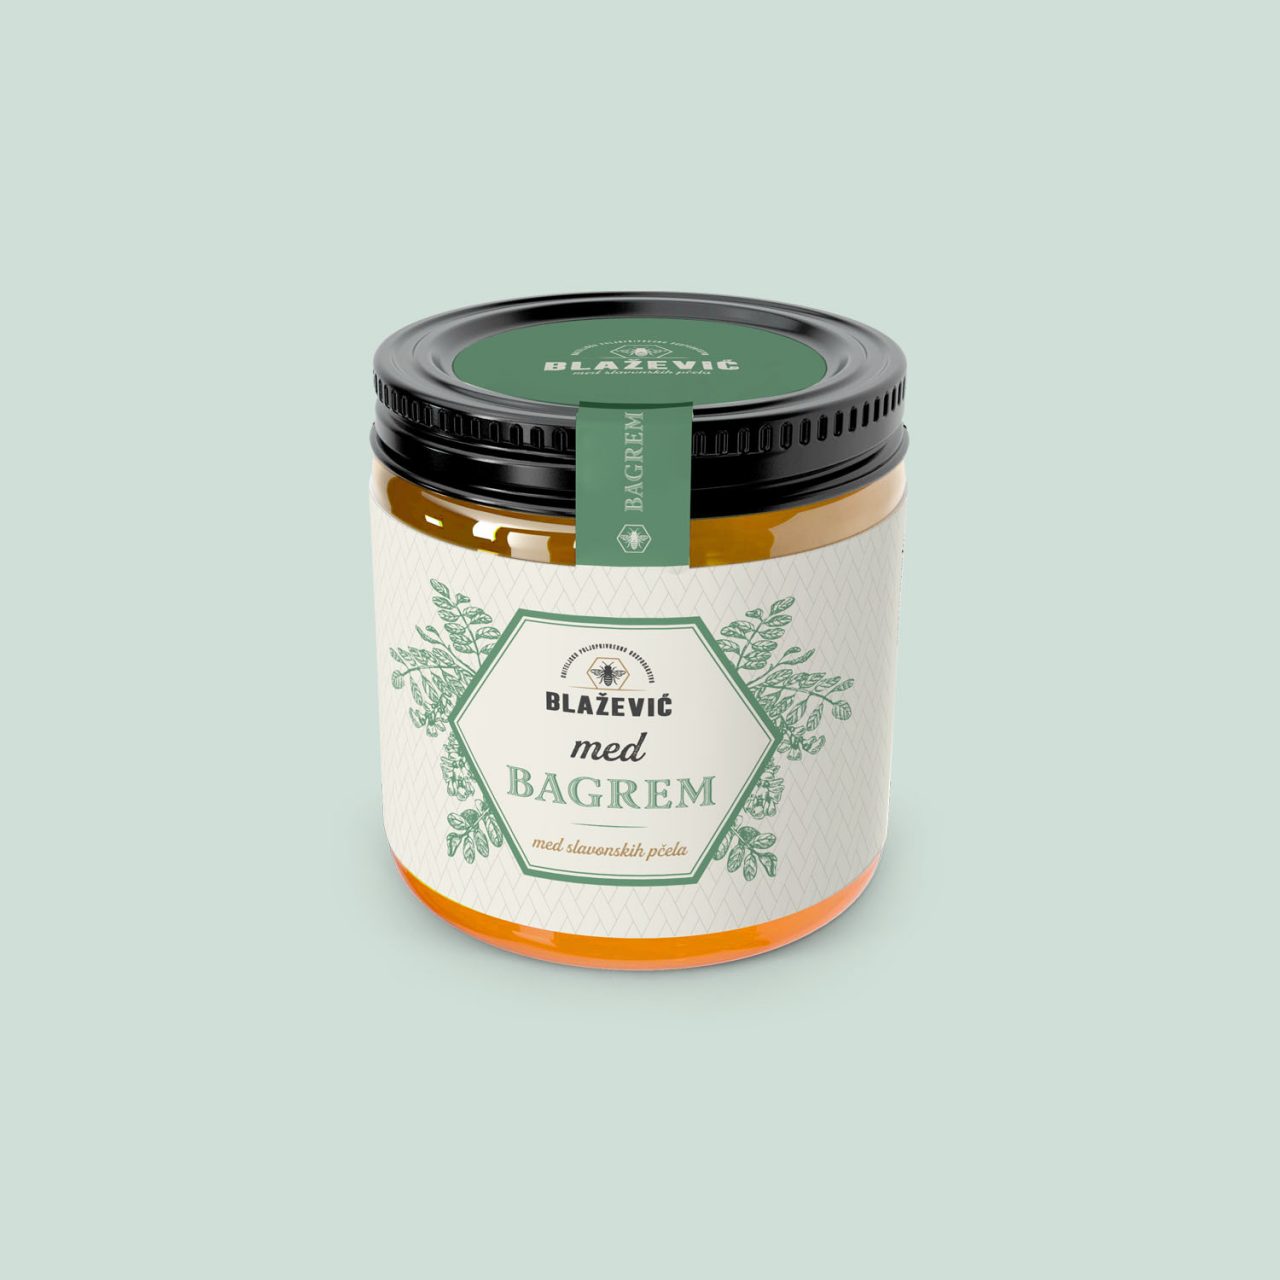 Label Design For Honey From Croatia